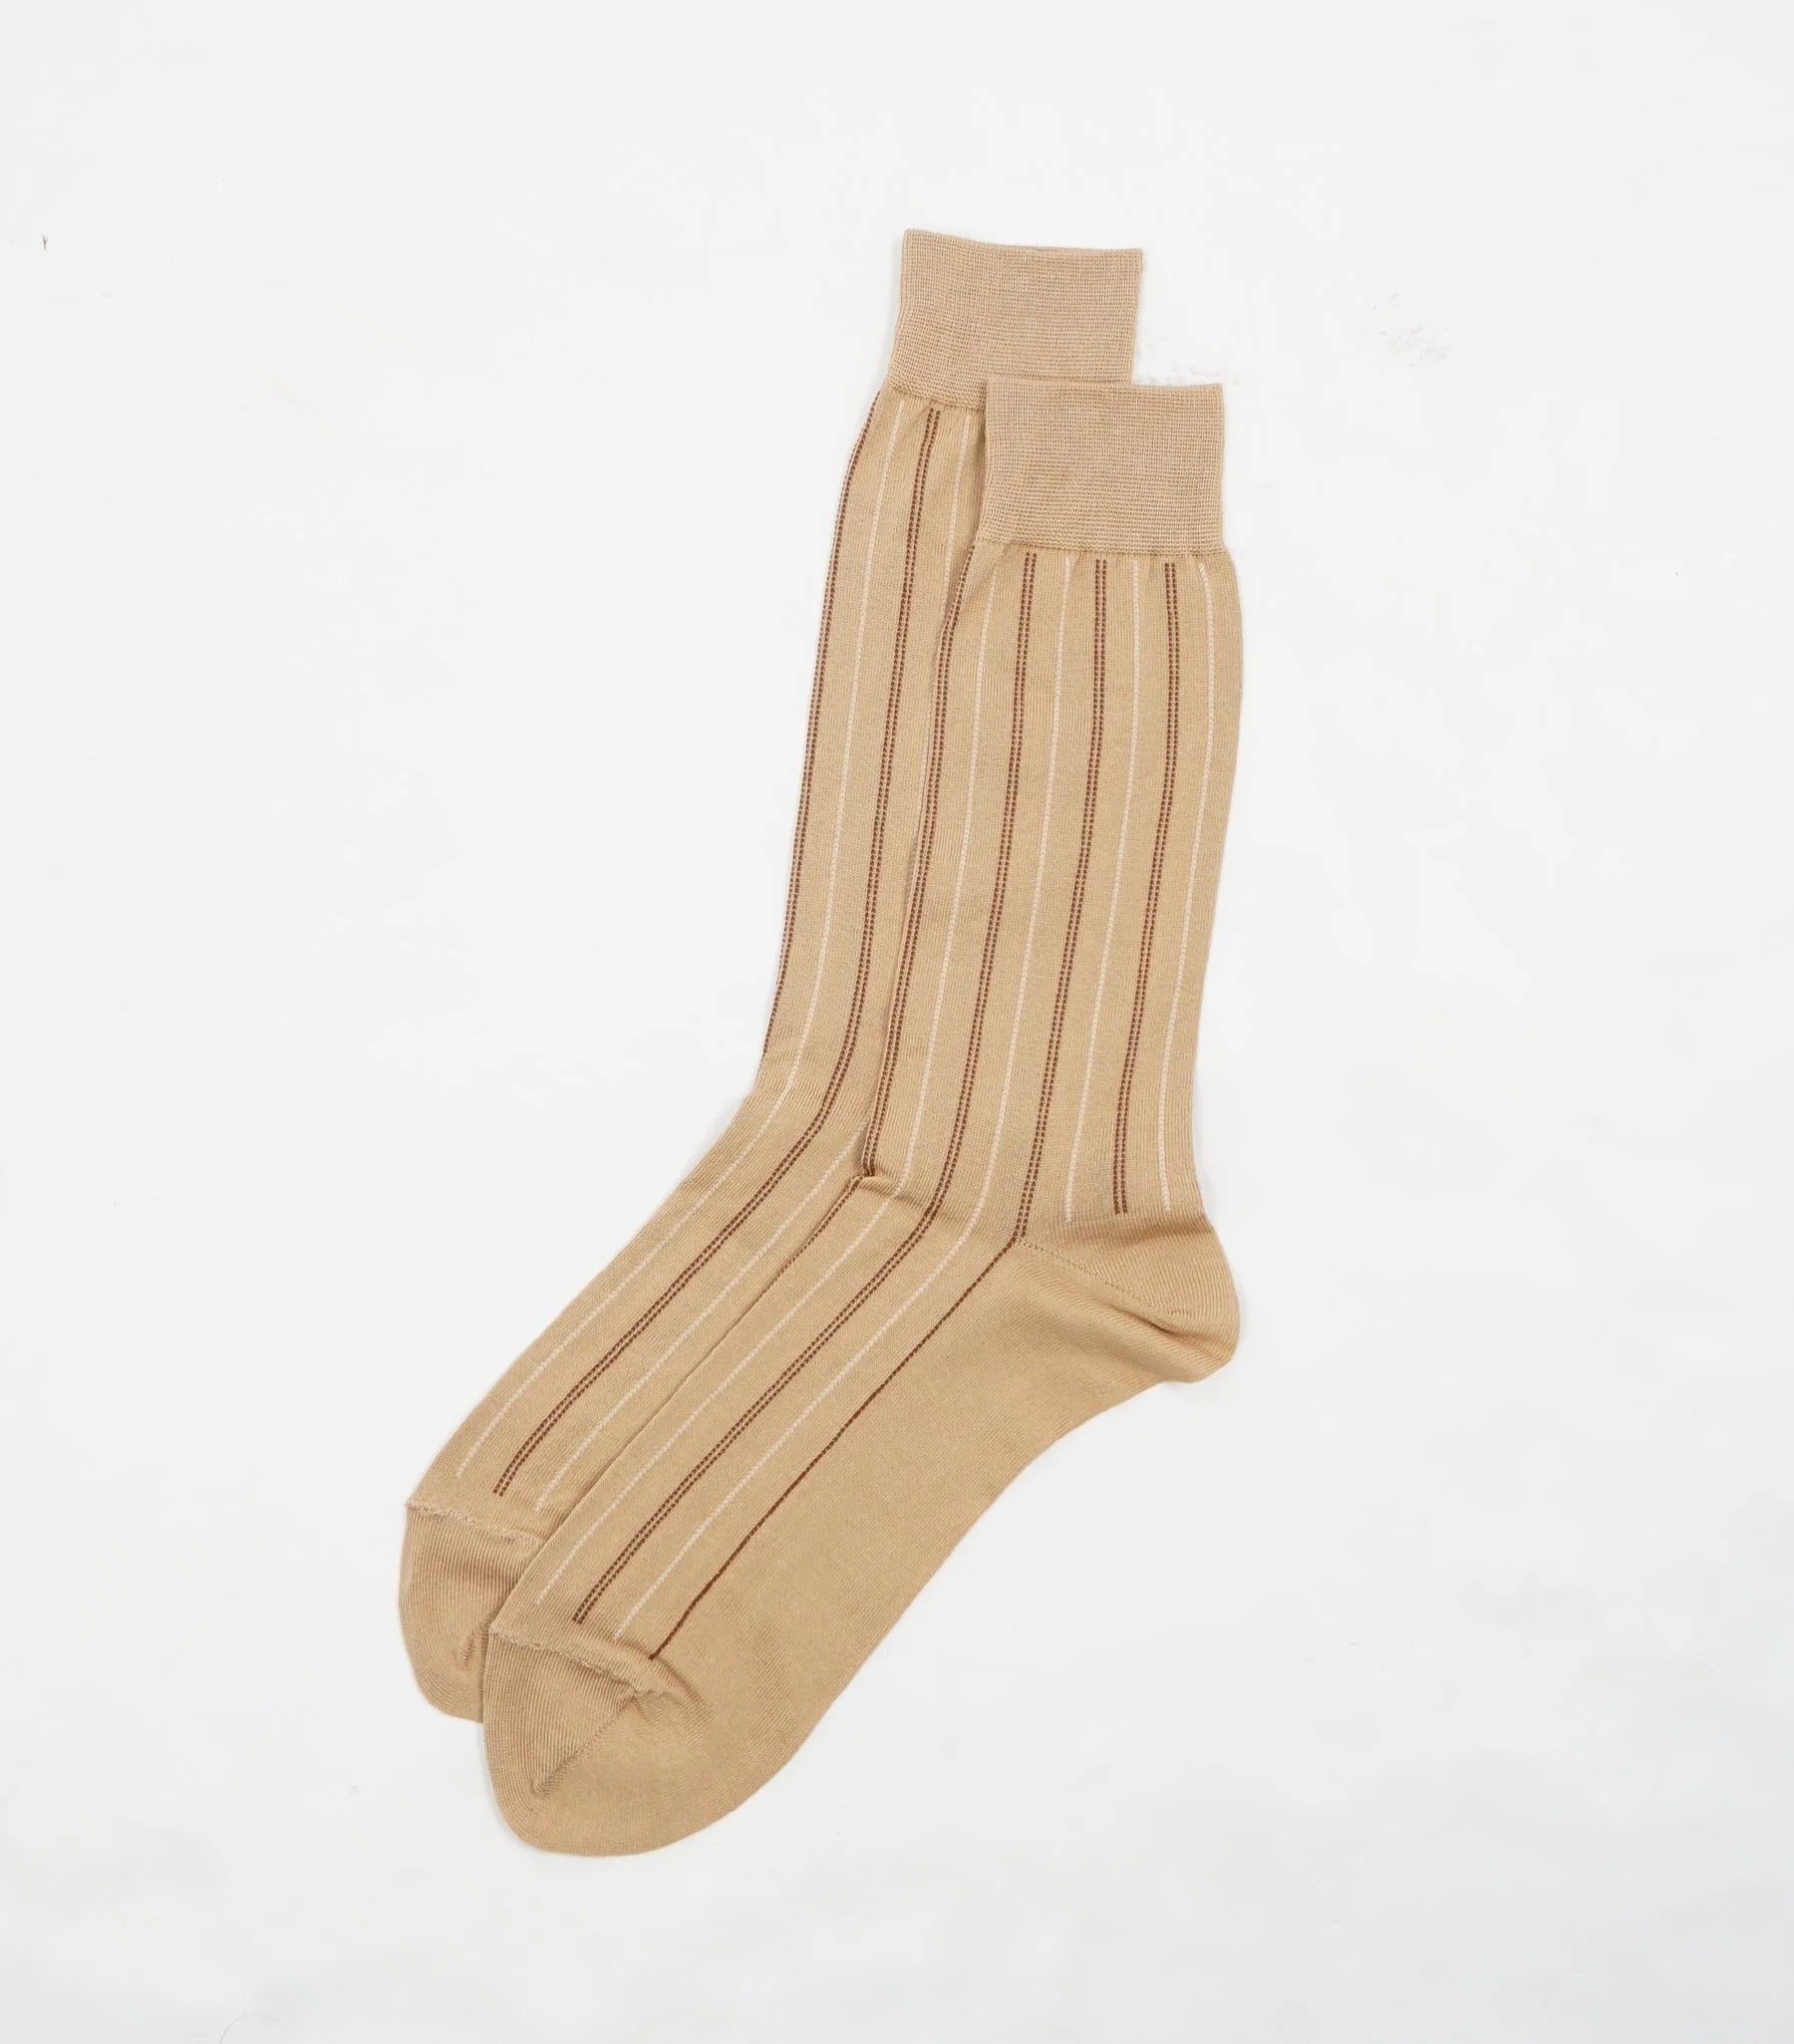 Striped Dress Socks Pack(You Save 10%)